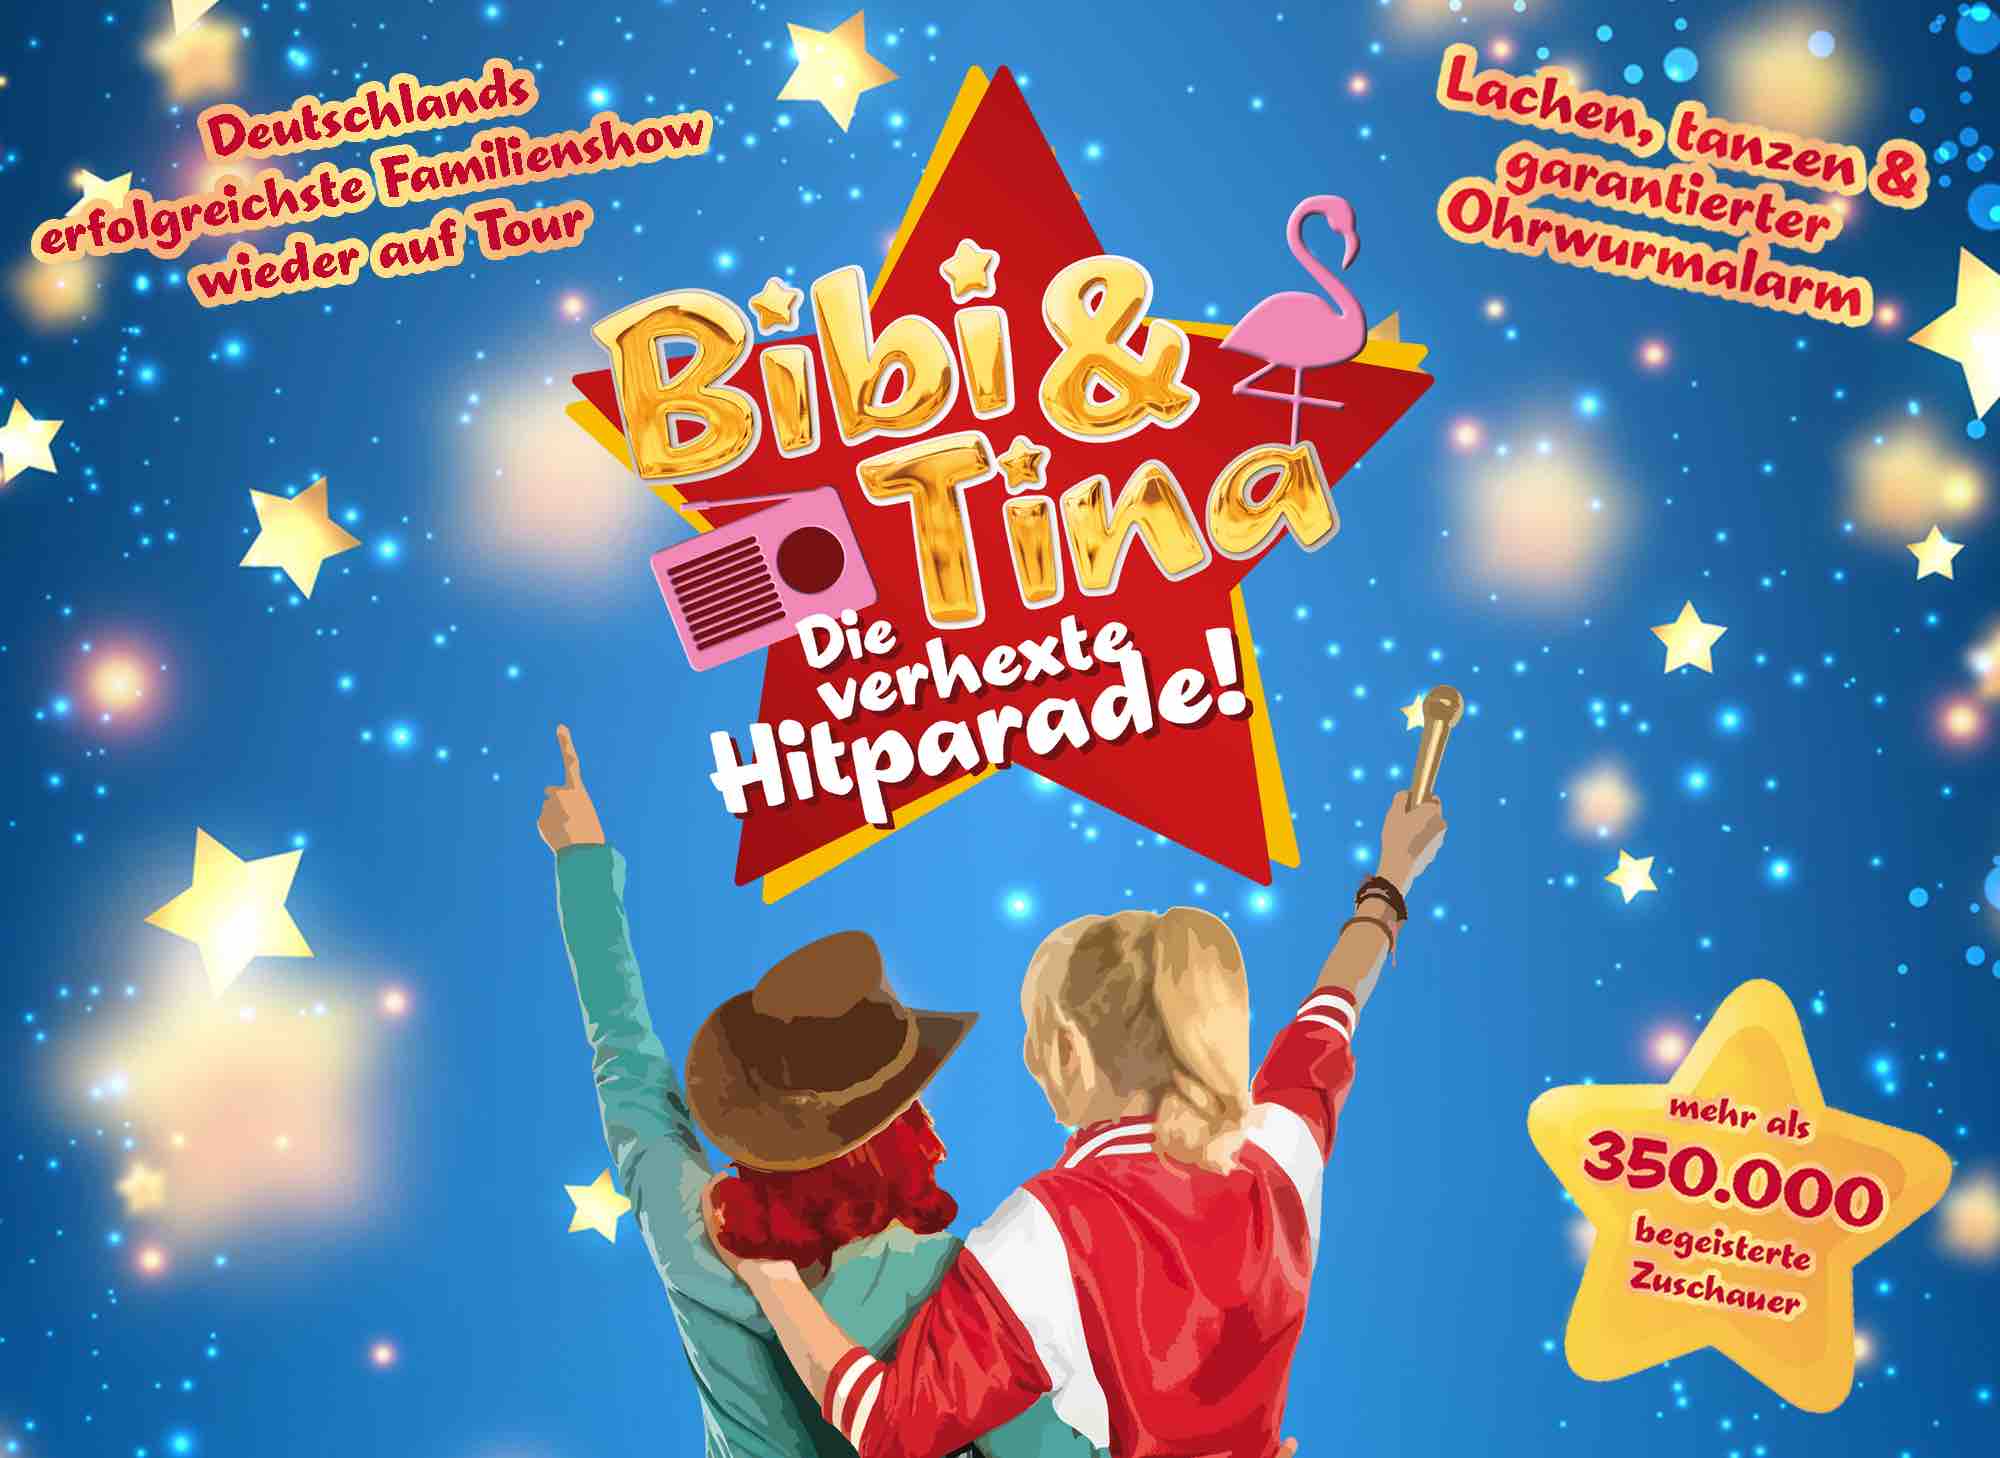 Leipzig-News.NET - Leipzig Infos & Leipzig Tipps | Bibi & Tina - Die verhexte Hitparade / Pressefoto